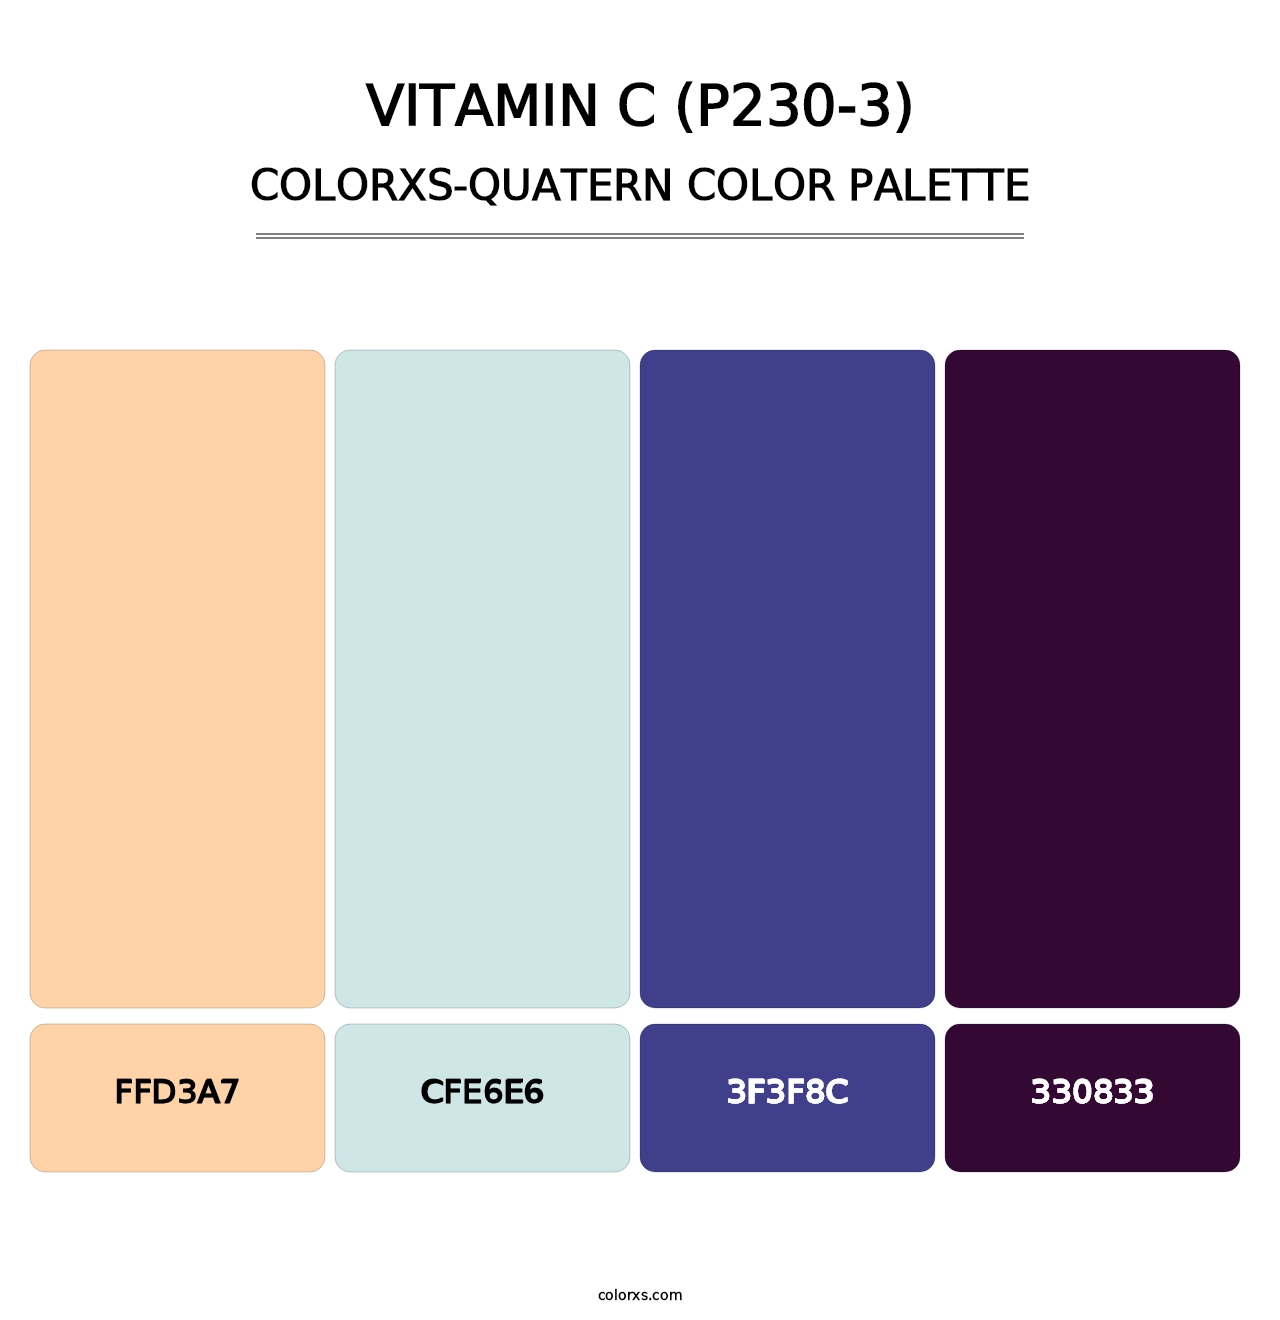 Vitamin C (P230-3) - Colorxs Quatern Palette